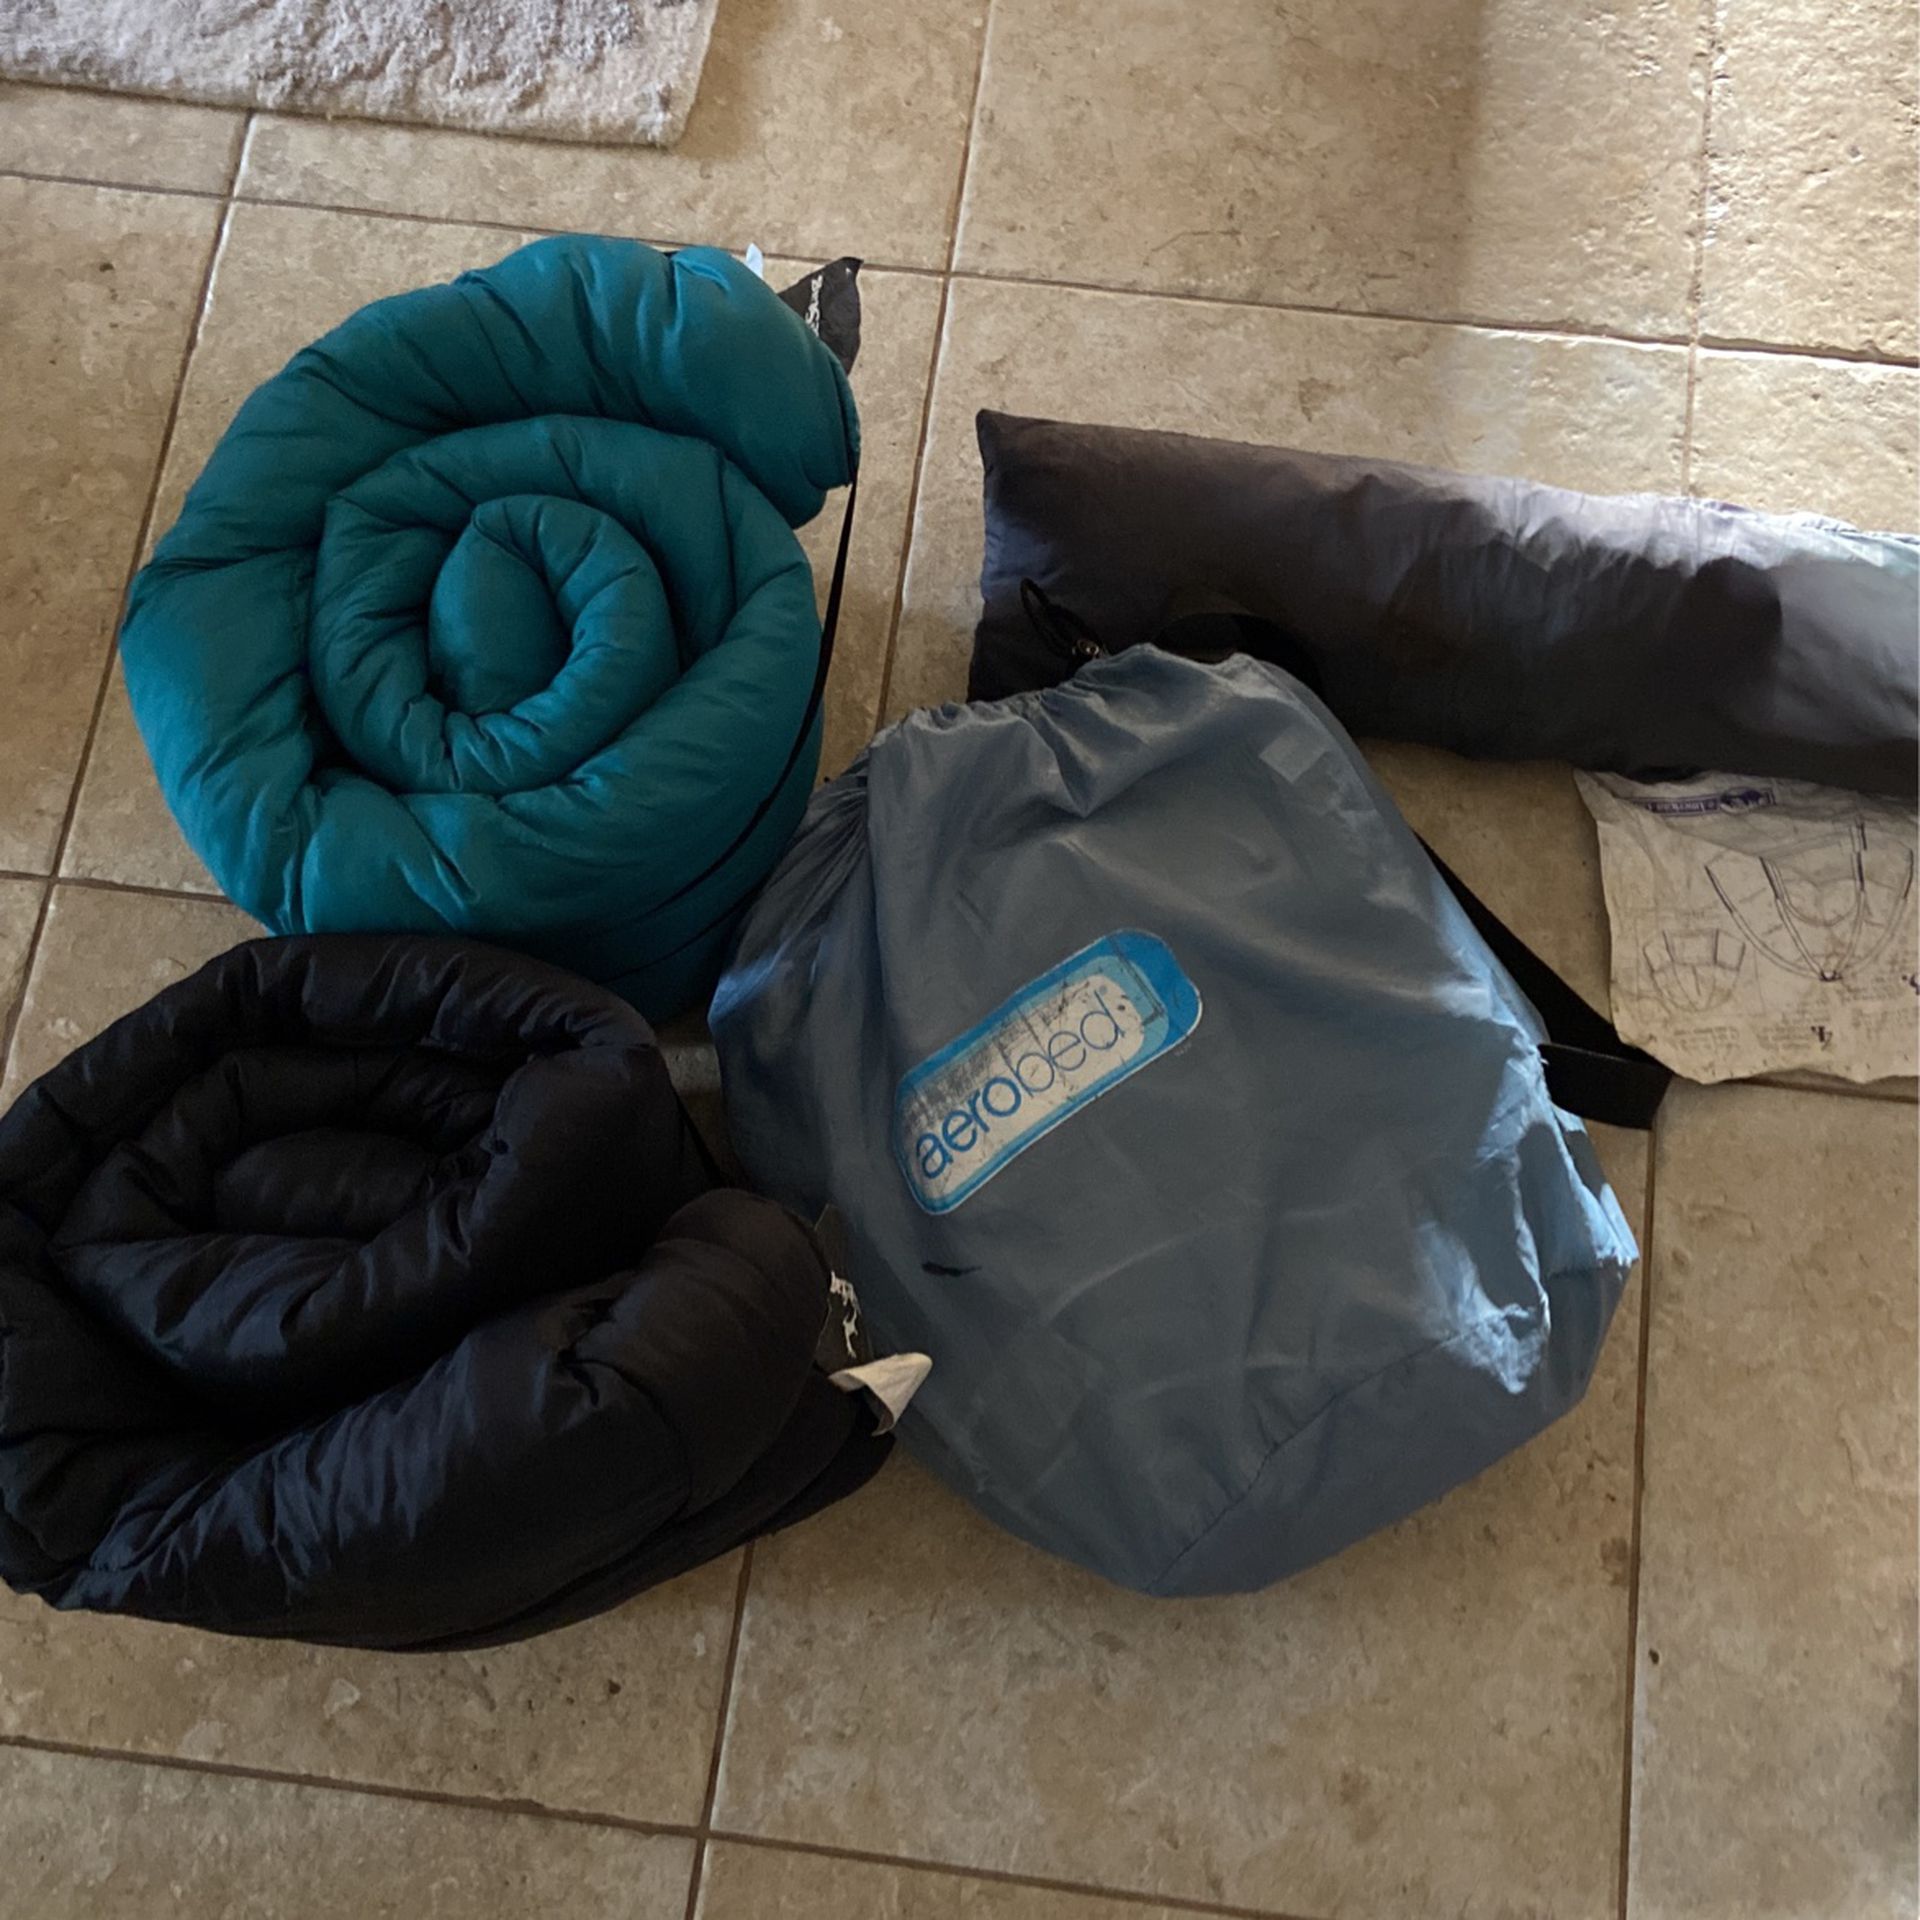 Camping Gear!  Tent Mattress And Sleeping Bags